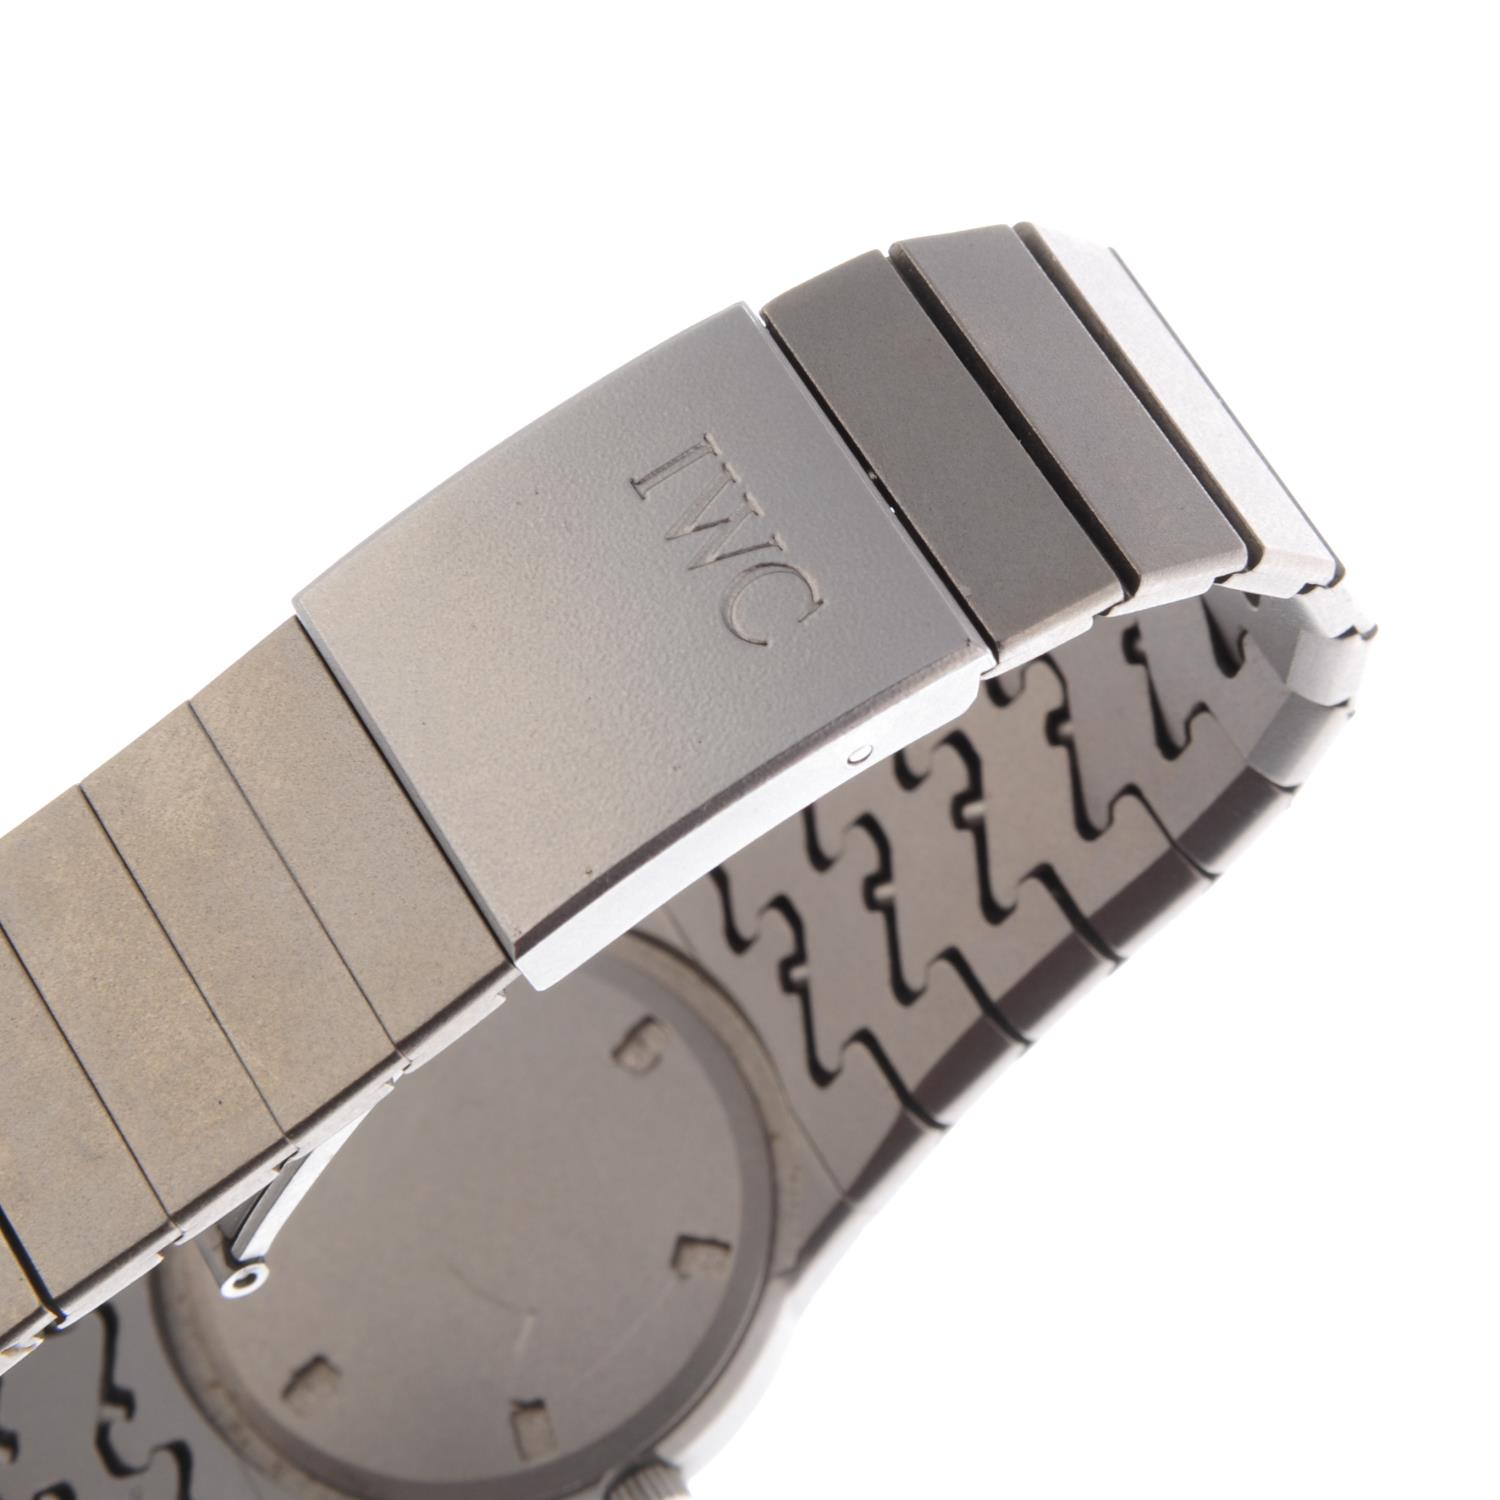 IWC - a lady's Porsche Design bracelet watch. Titanium case. Reference 4517, serial 2316075. - Image 2 of 5